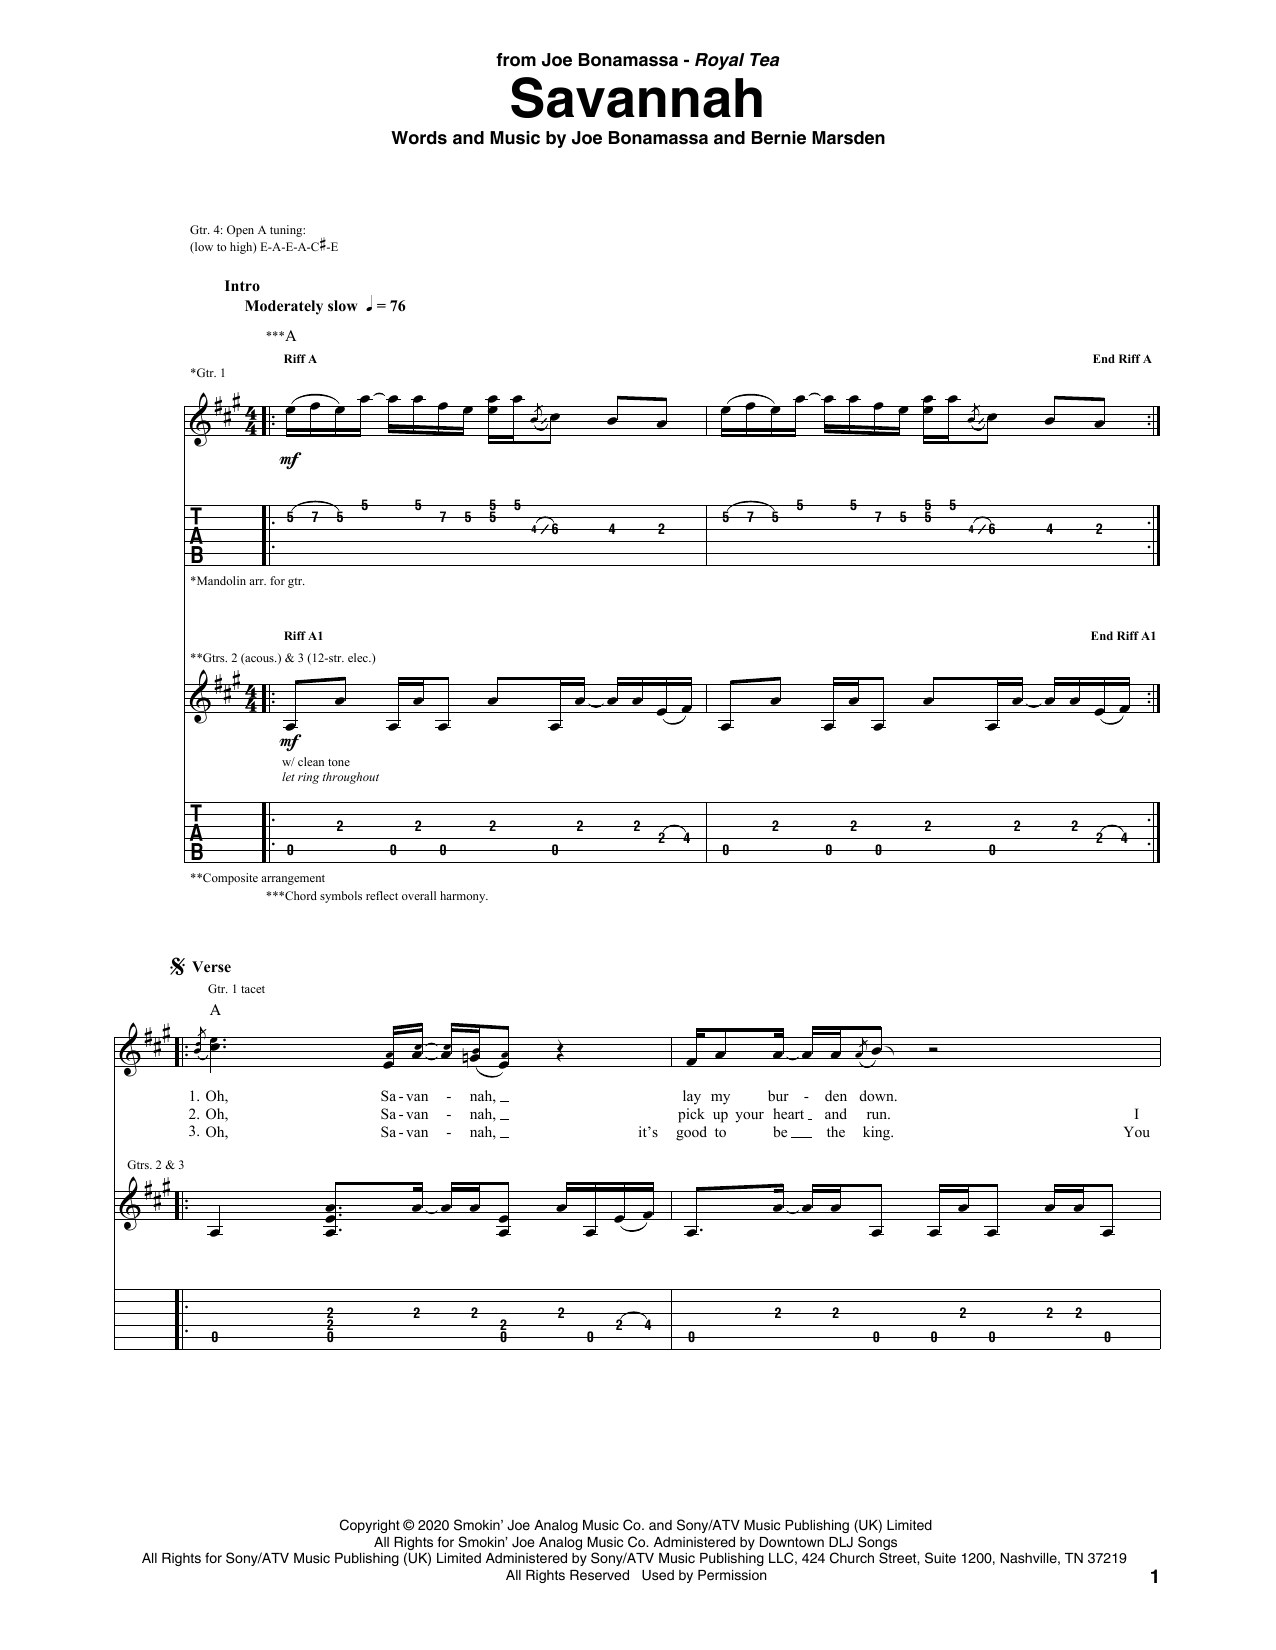 Download Joe Bonamassa Savannah Sheet Music and learn how to play Guitar Tab PDF digital score in minutes